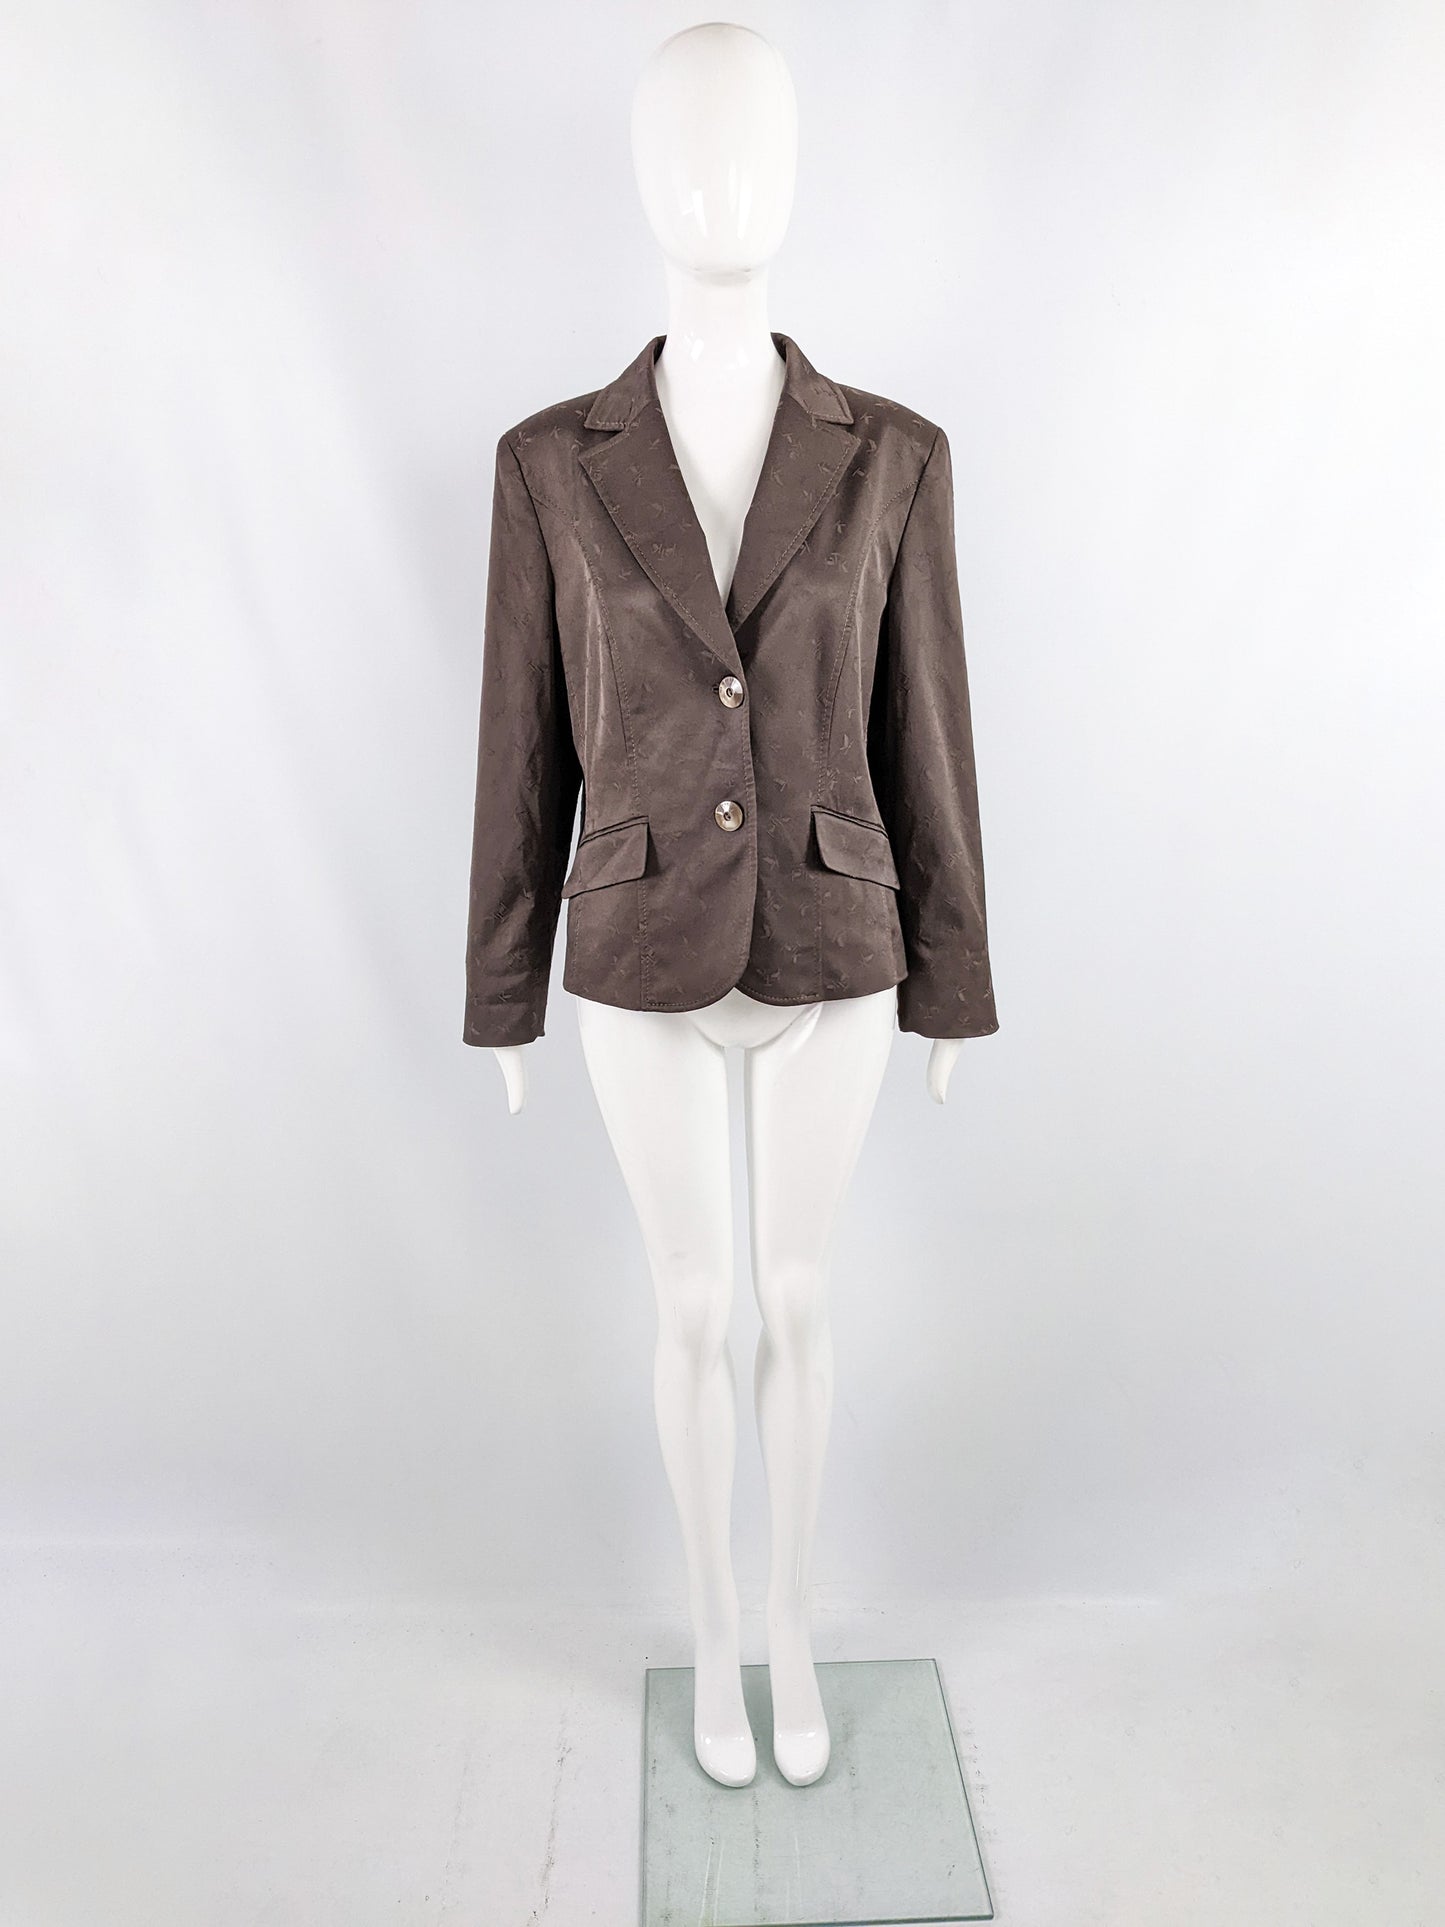 Krizia Vintage Spellout Jacquard Shoulder Padded Blazer Jacket, 1990s